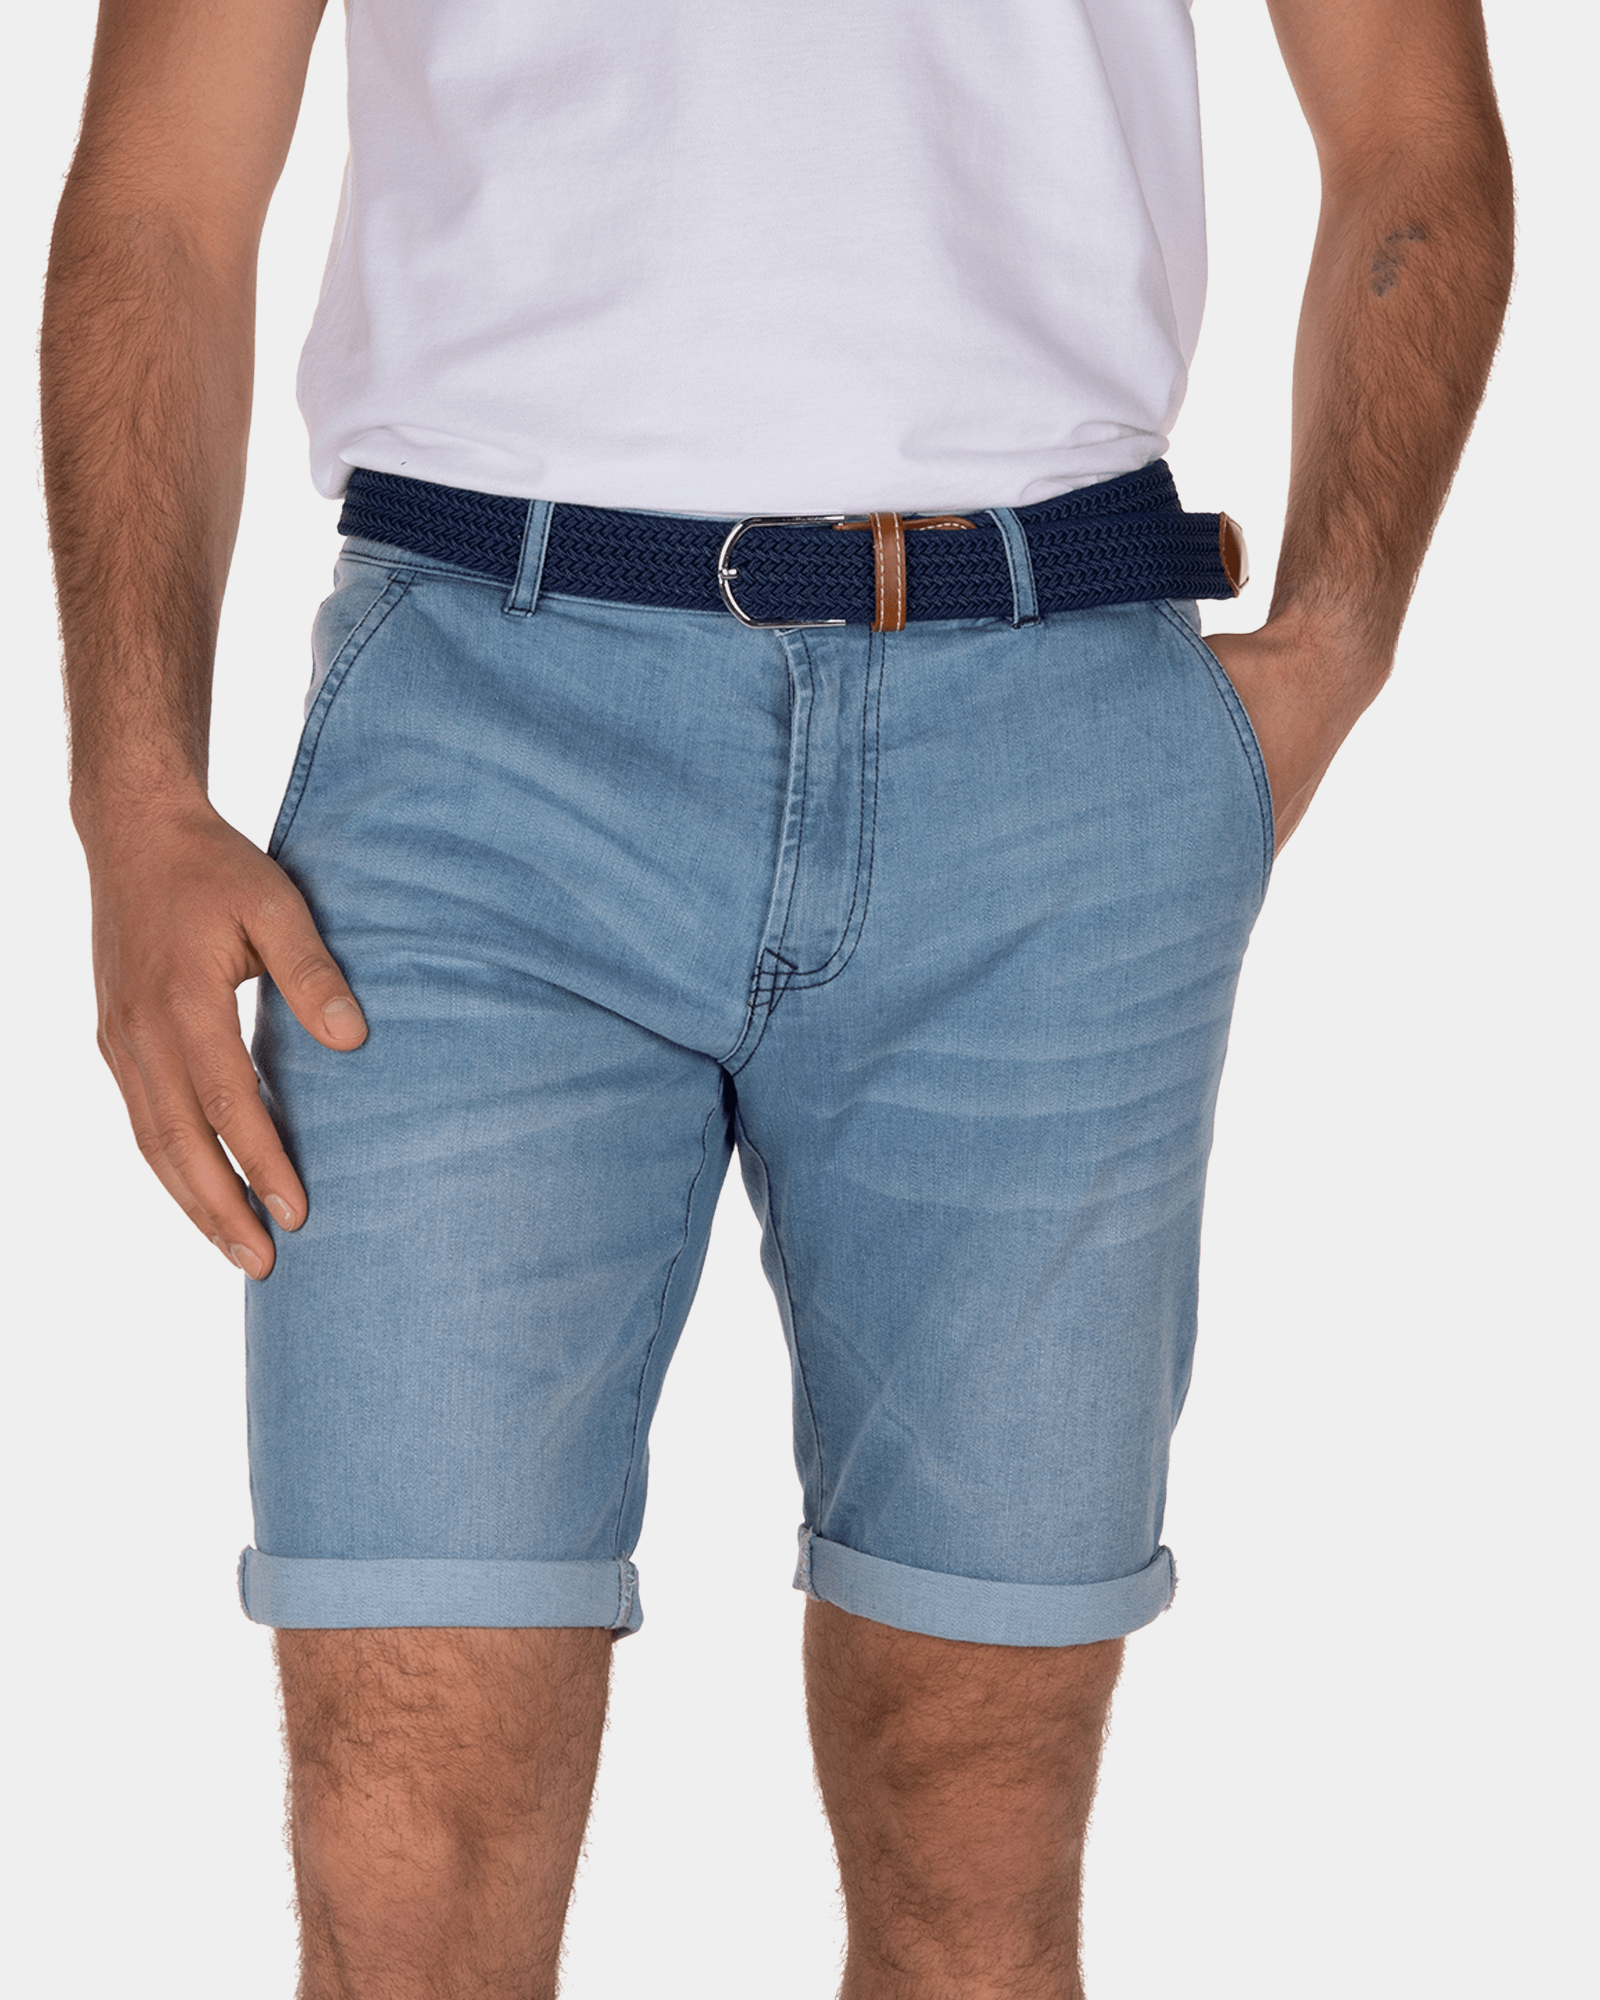 Dunedine jeans shorts - Light Stone | NZA New Zealand Auckland